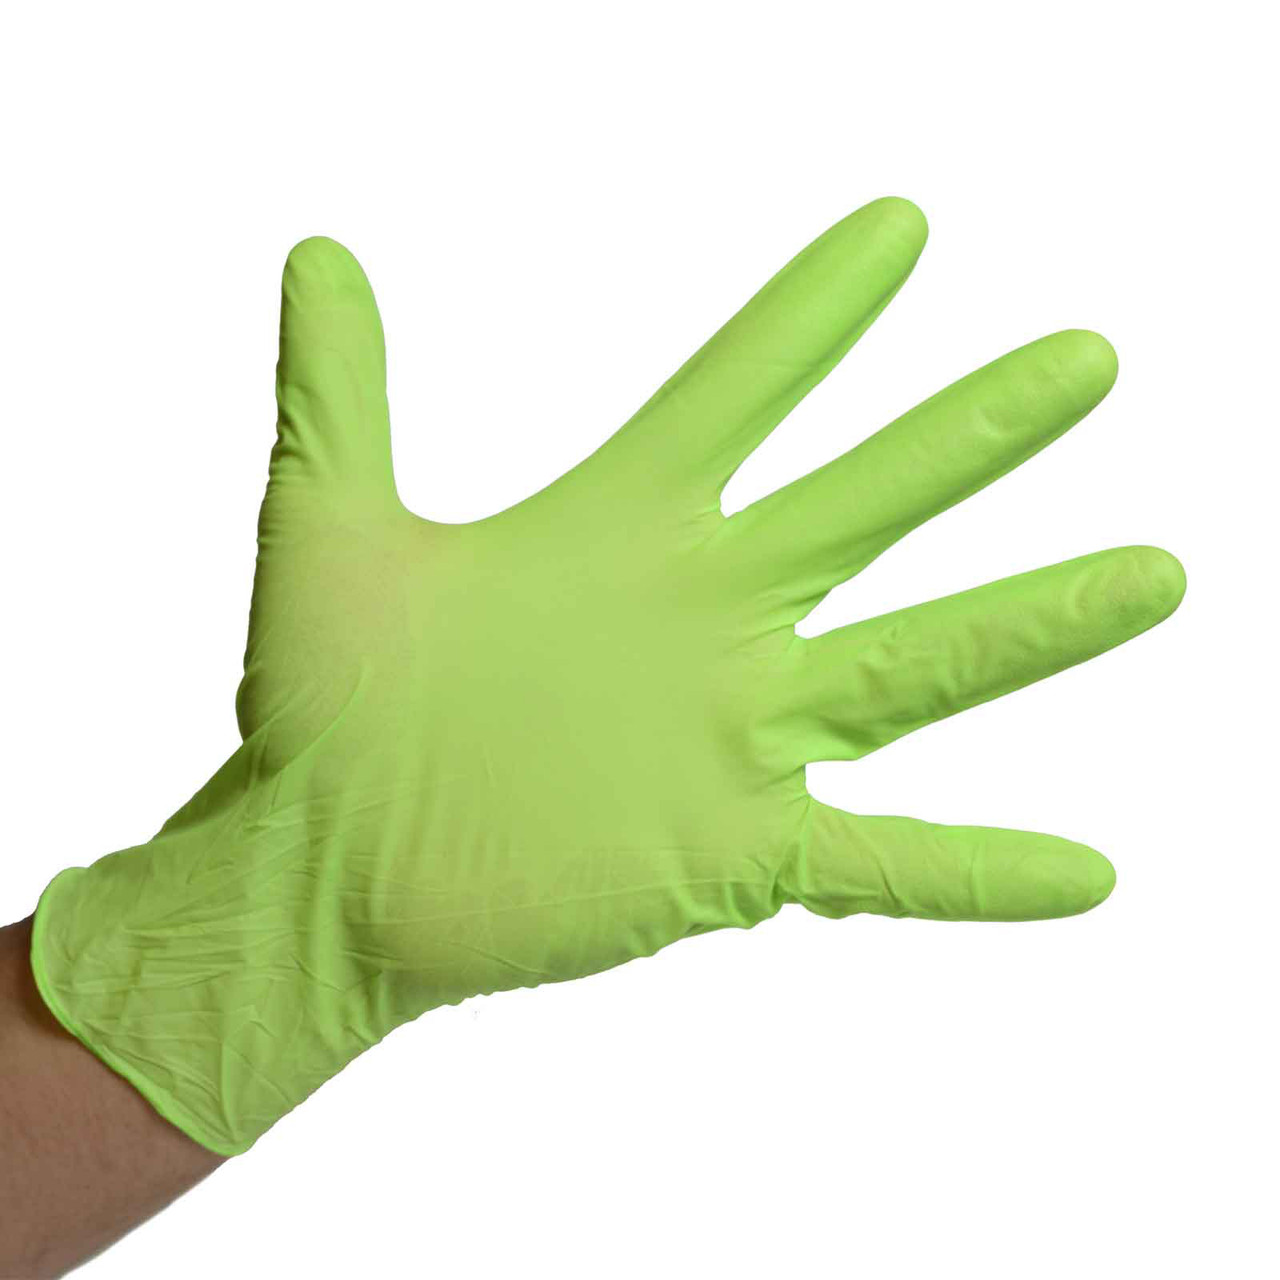 Black Nitrile Gloves Powder Free 7 Mil Case Of 1000